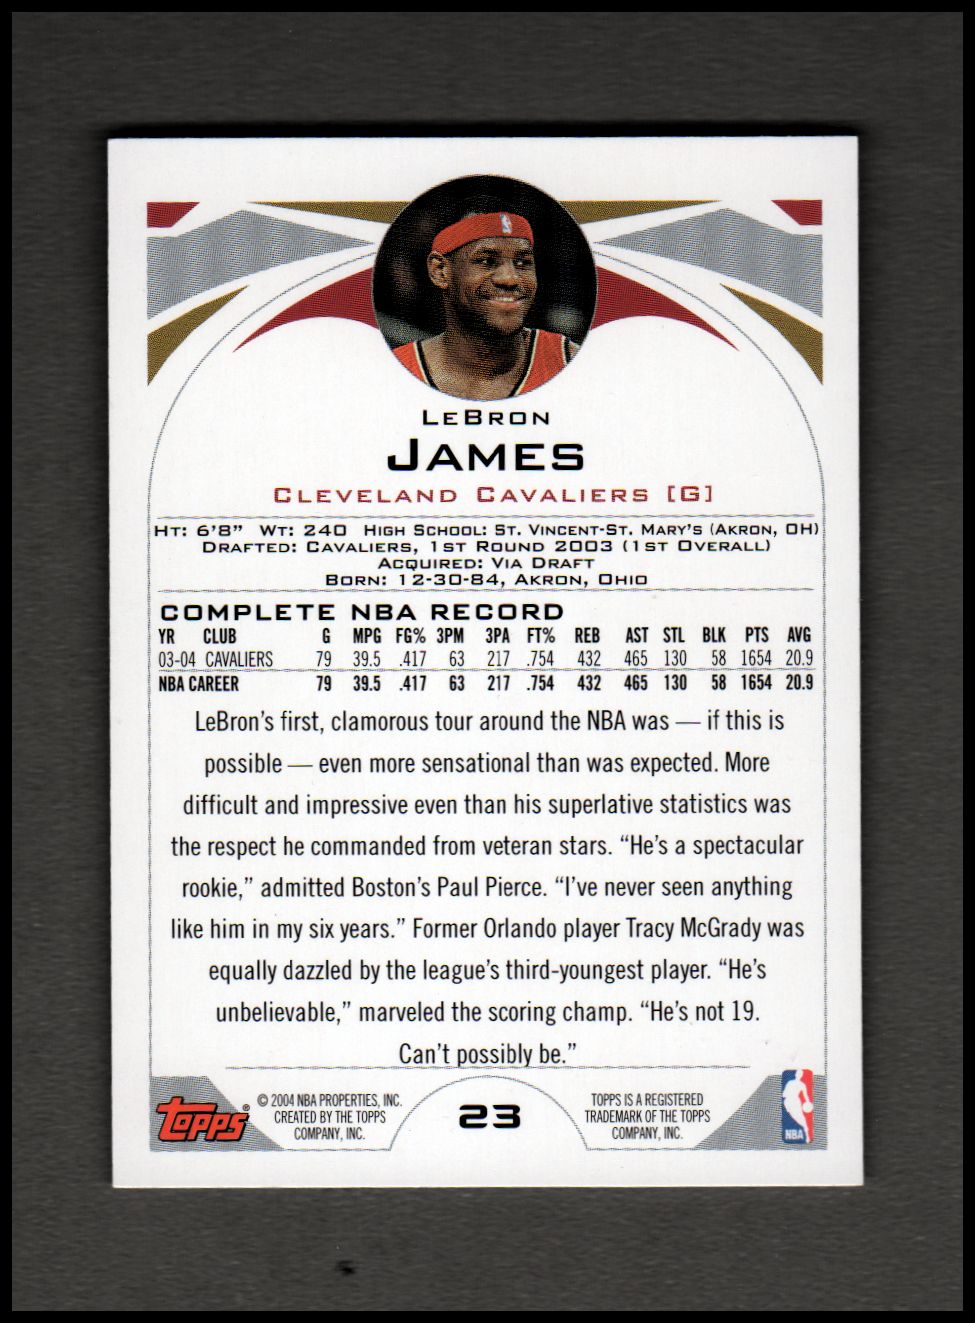 2004-05 Topps #23 LeBron James back image